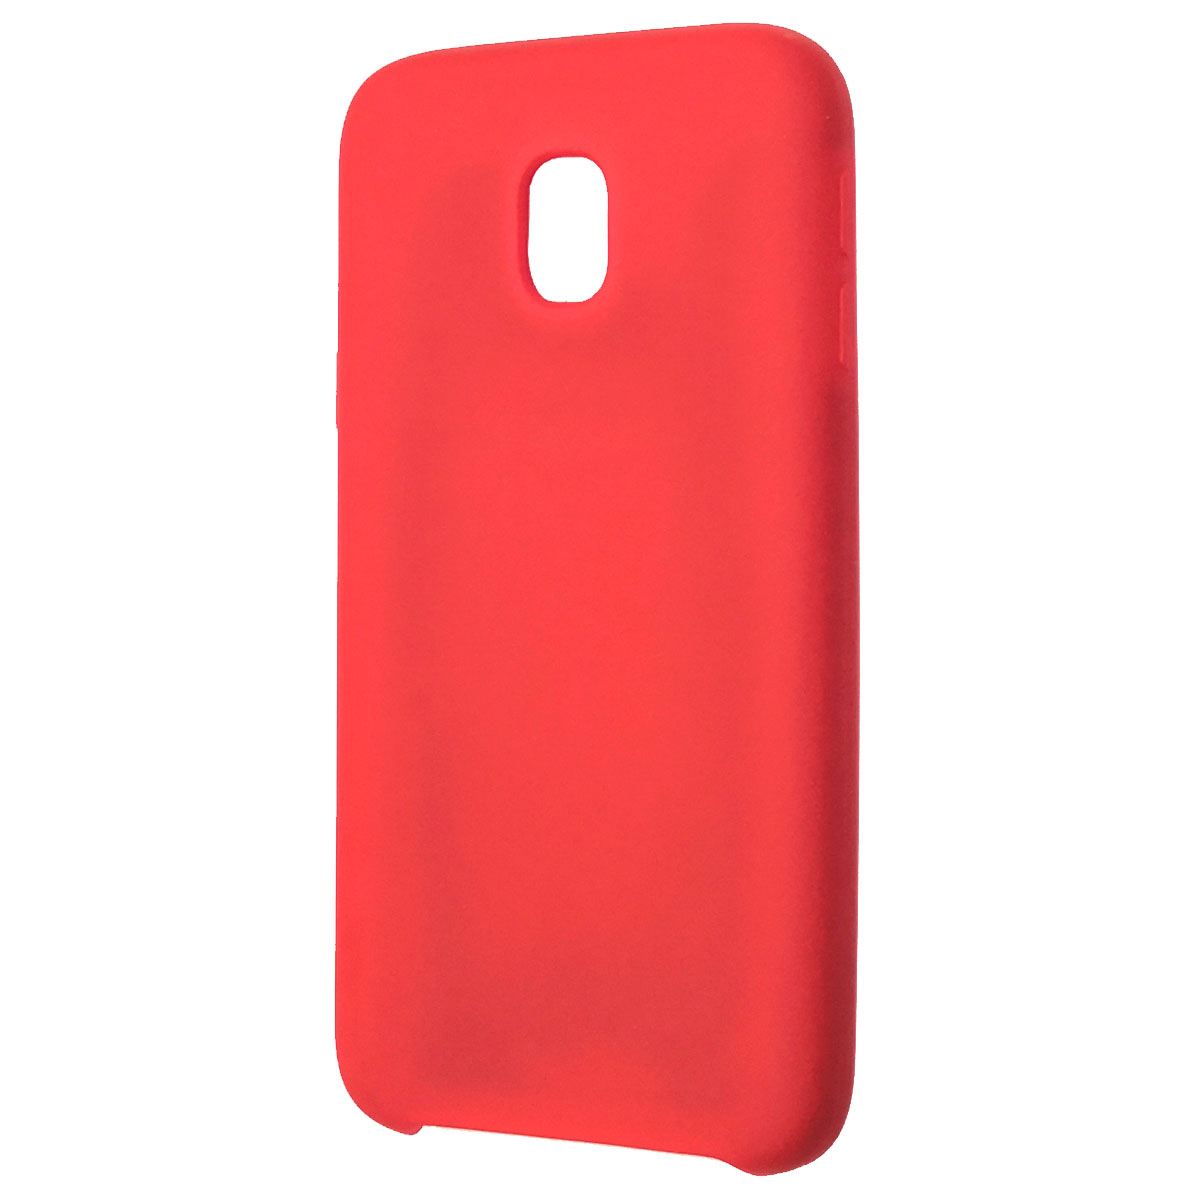 Чехол накладка Silicon Cover для SAMSUNG Galaxy J3 2017, цвет красный